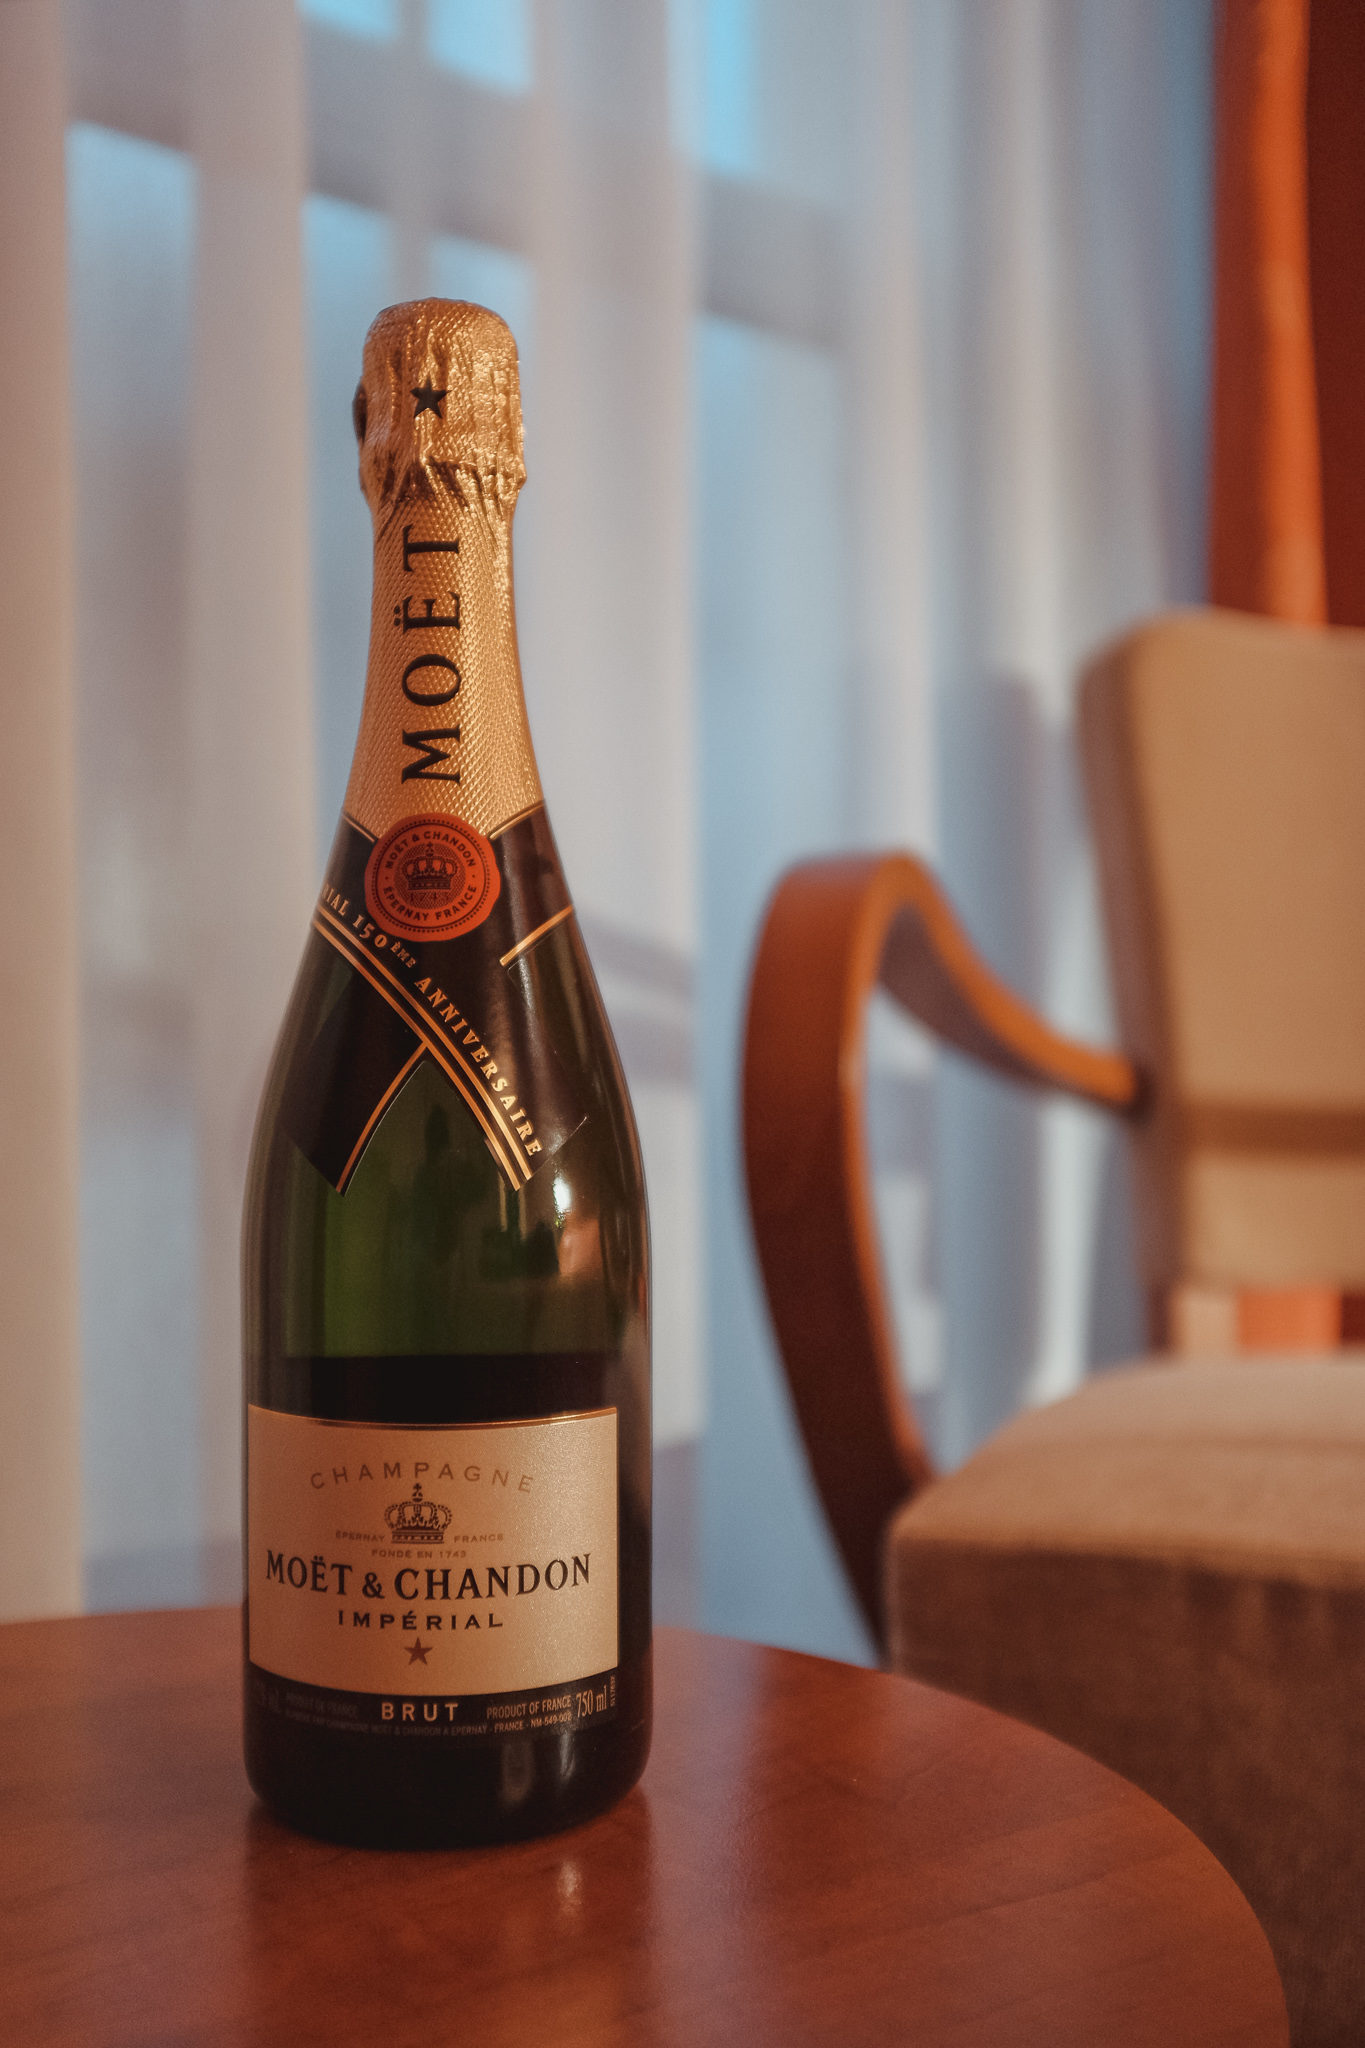 Bouteille de Champagne Moet & Chandon Épernay